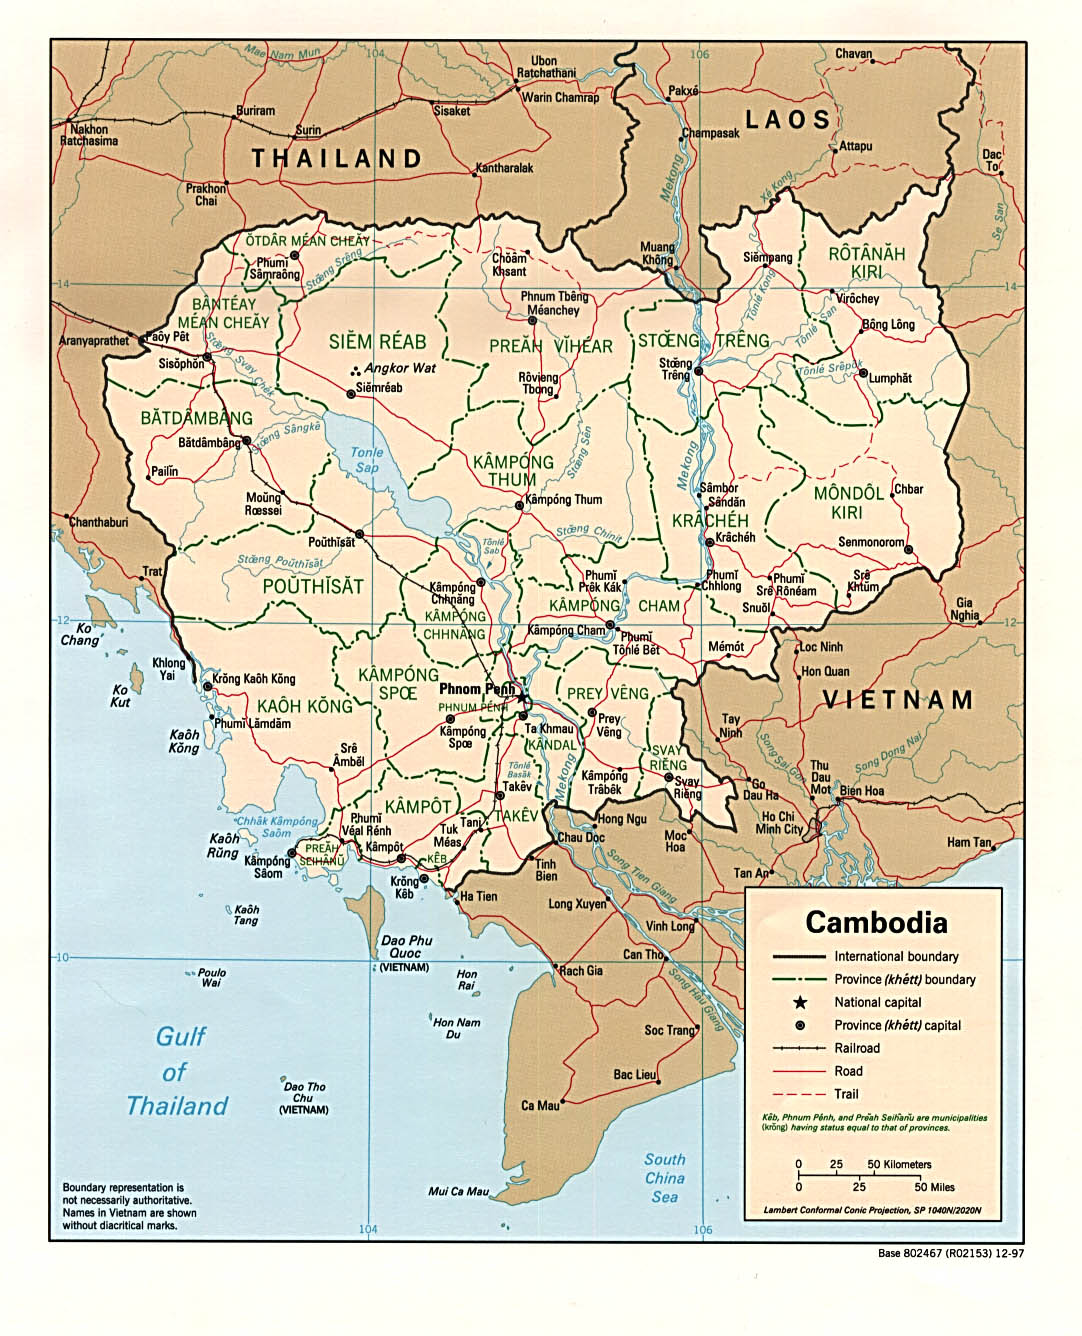 Political map of Cambodia, 1997